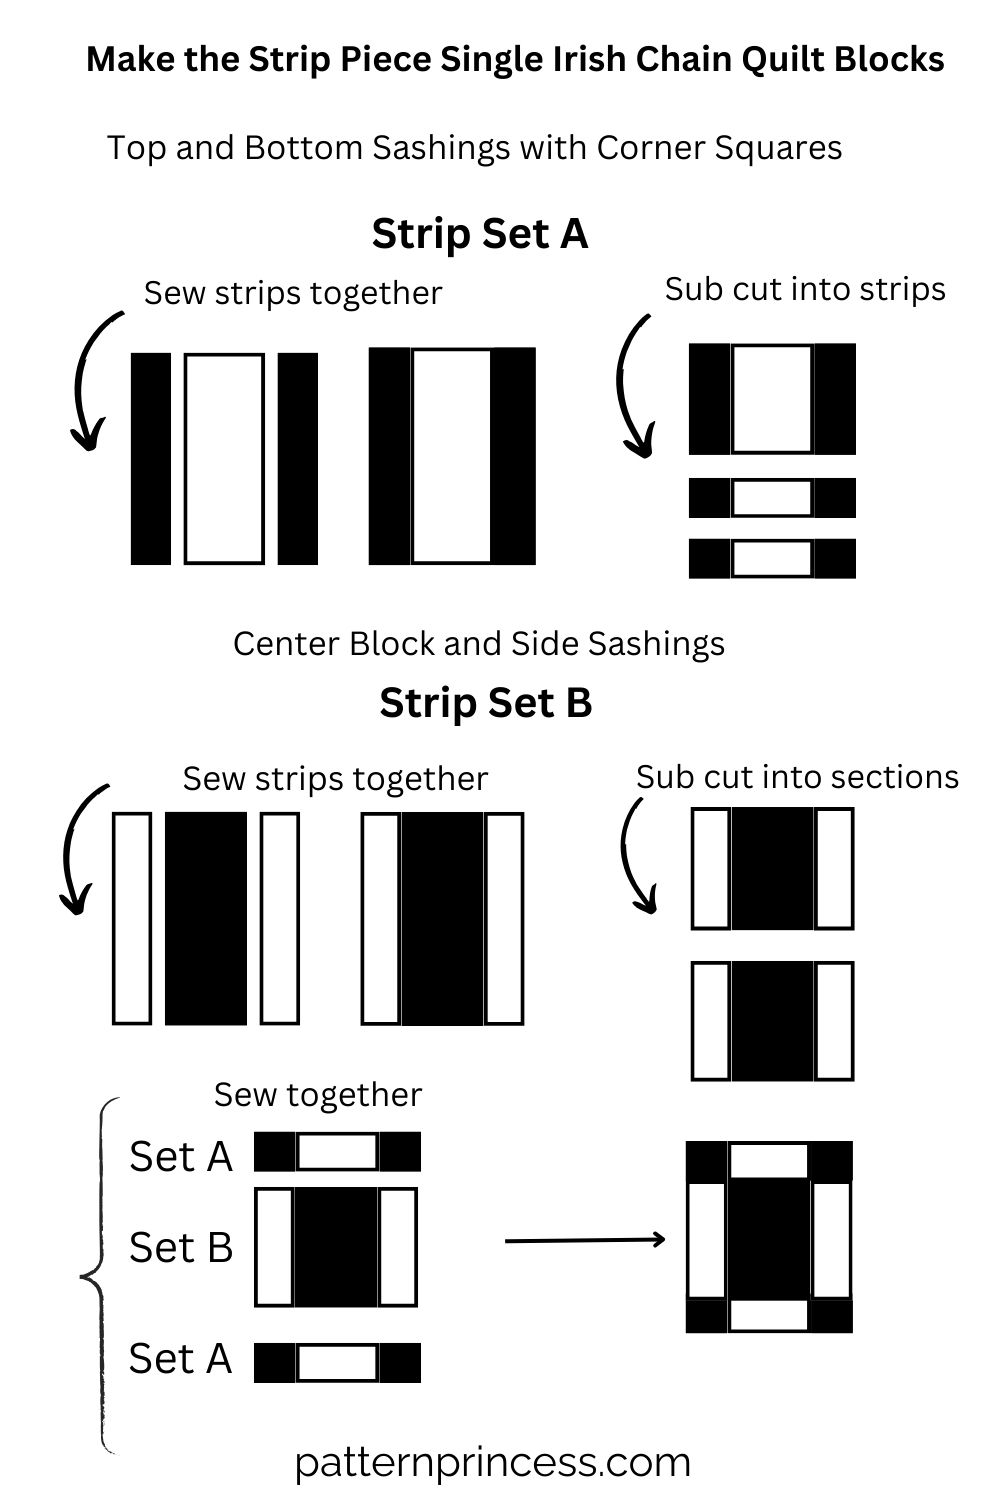 Make the Strip Piece Single Irish Chain Quilt Blocks